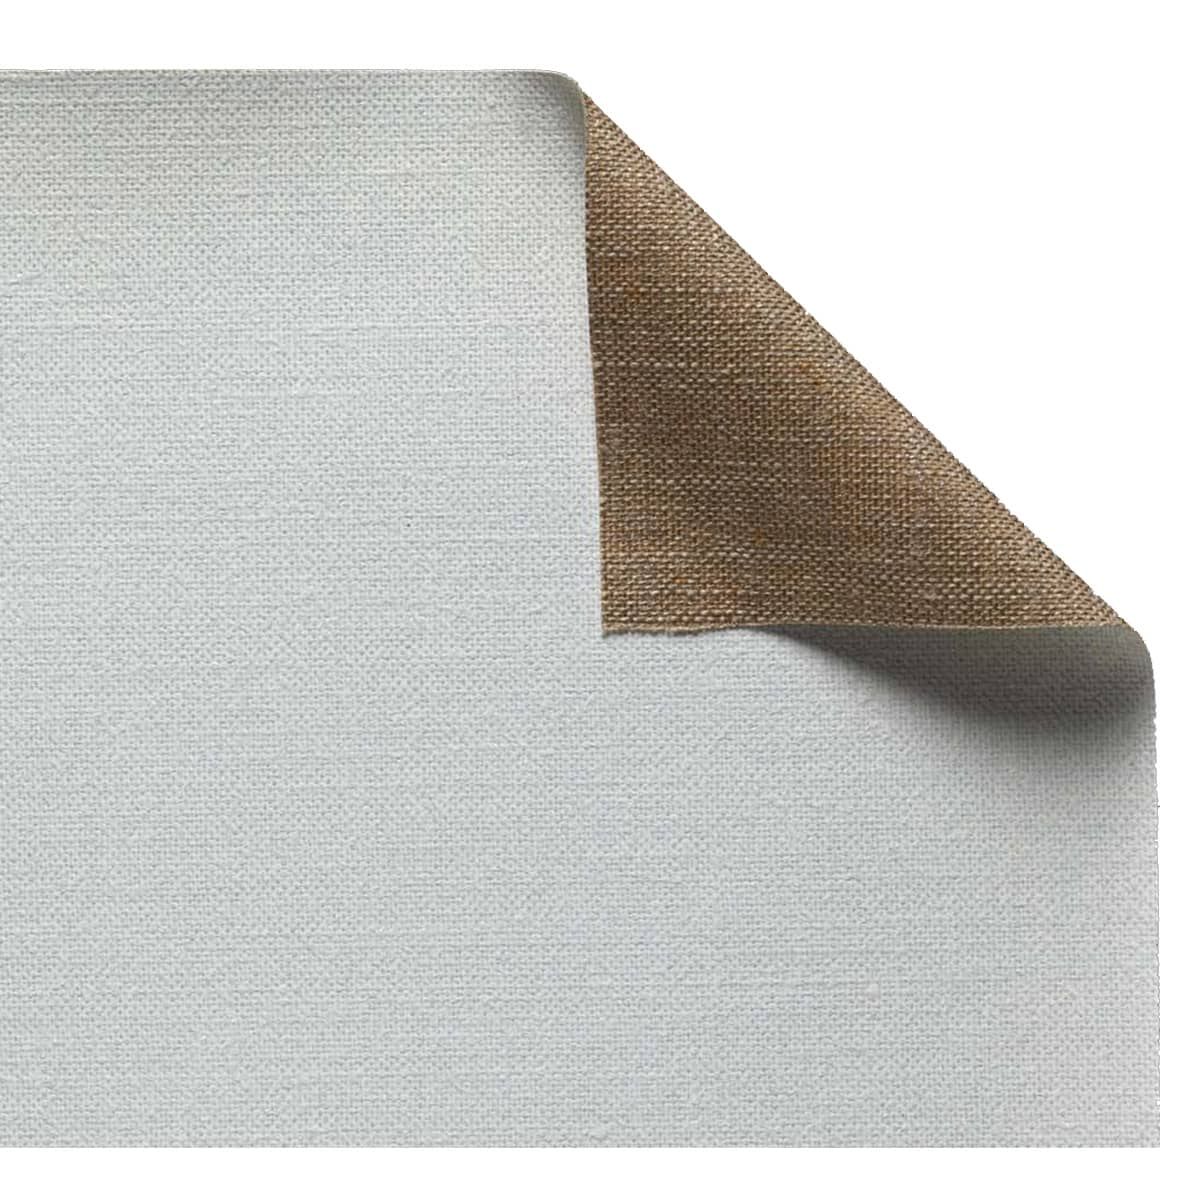 Claessens Double Oil Primed Linen Roll #9 - Fine Texture 82" x 6 Yards